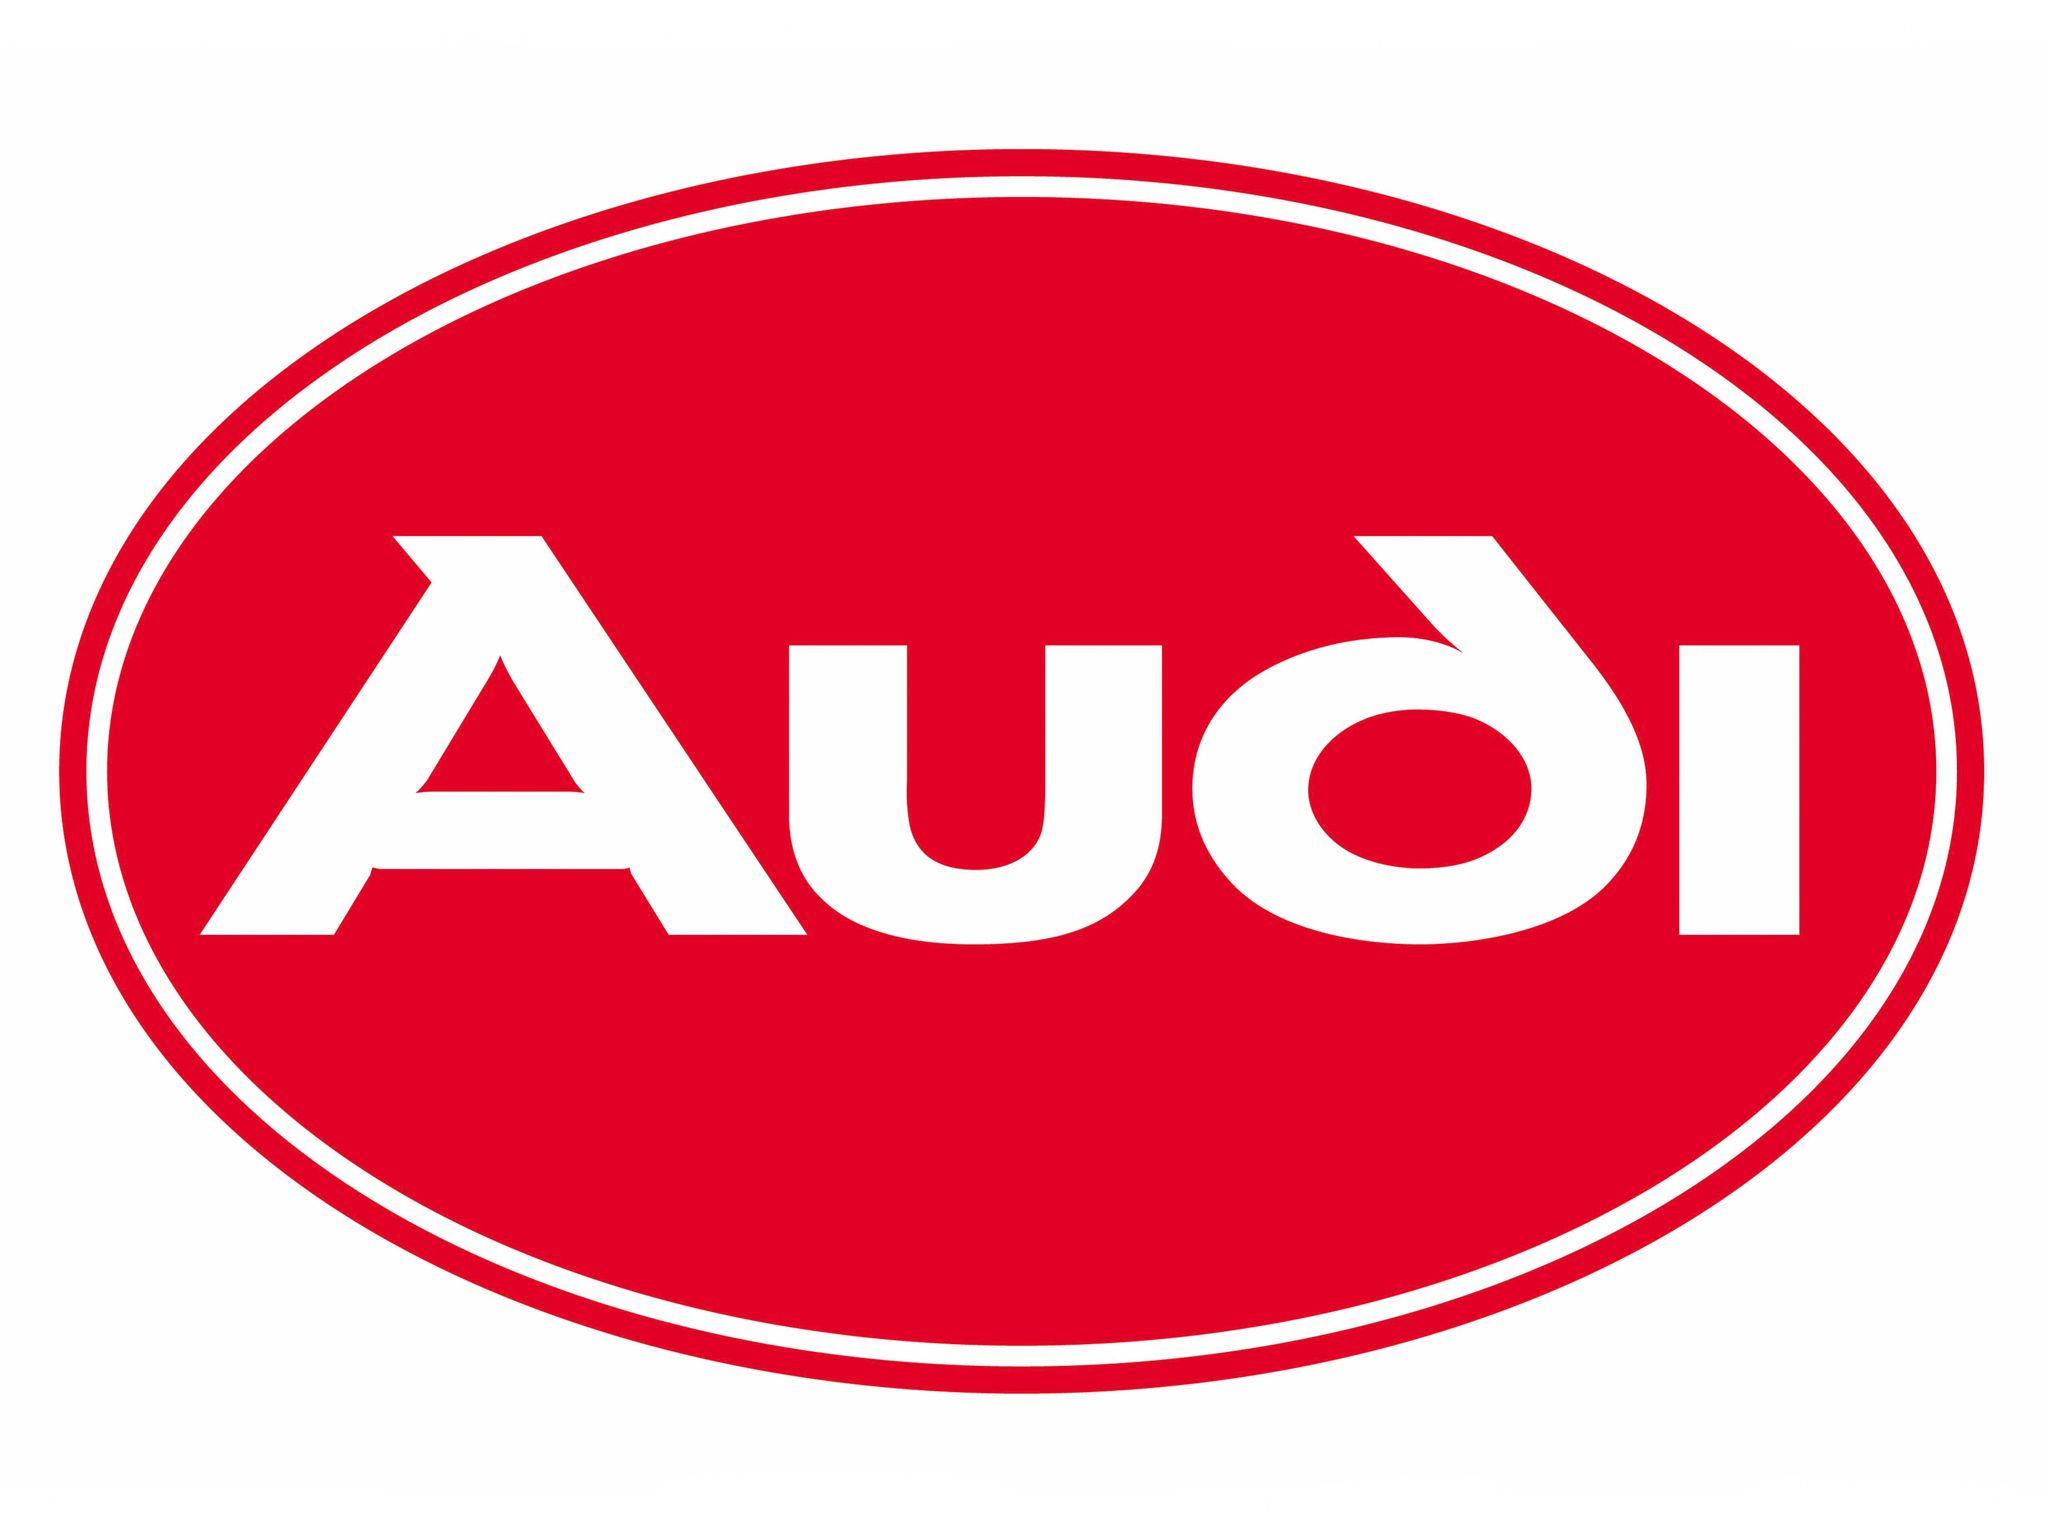 Old Audi Logo - Audi Old Logo wallpaper 2018 in Brands & Logos